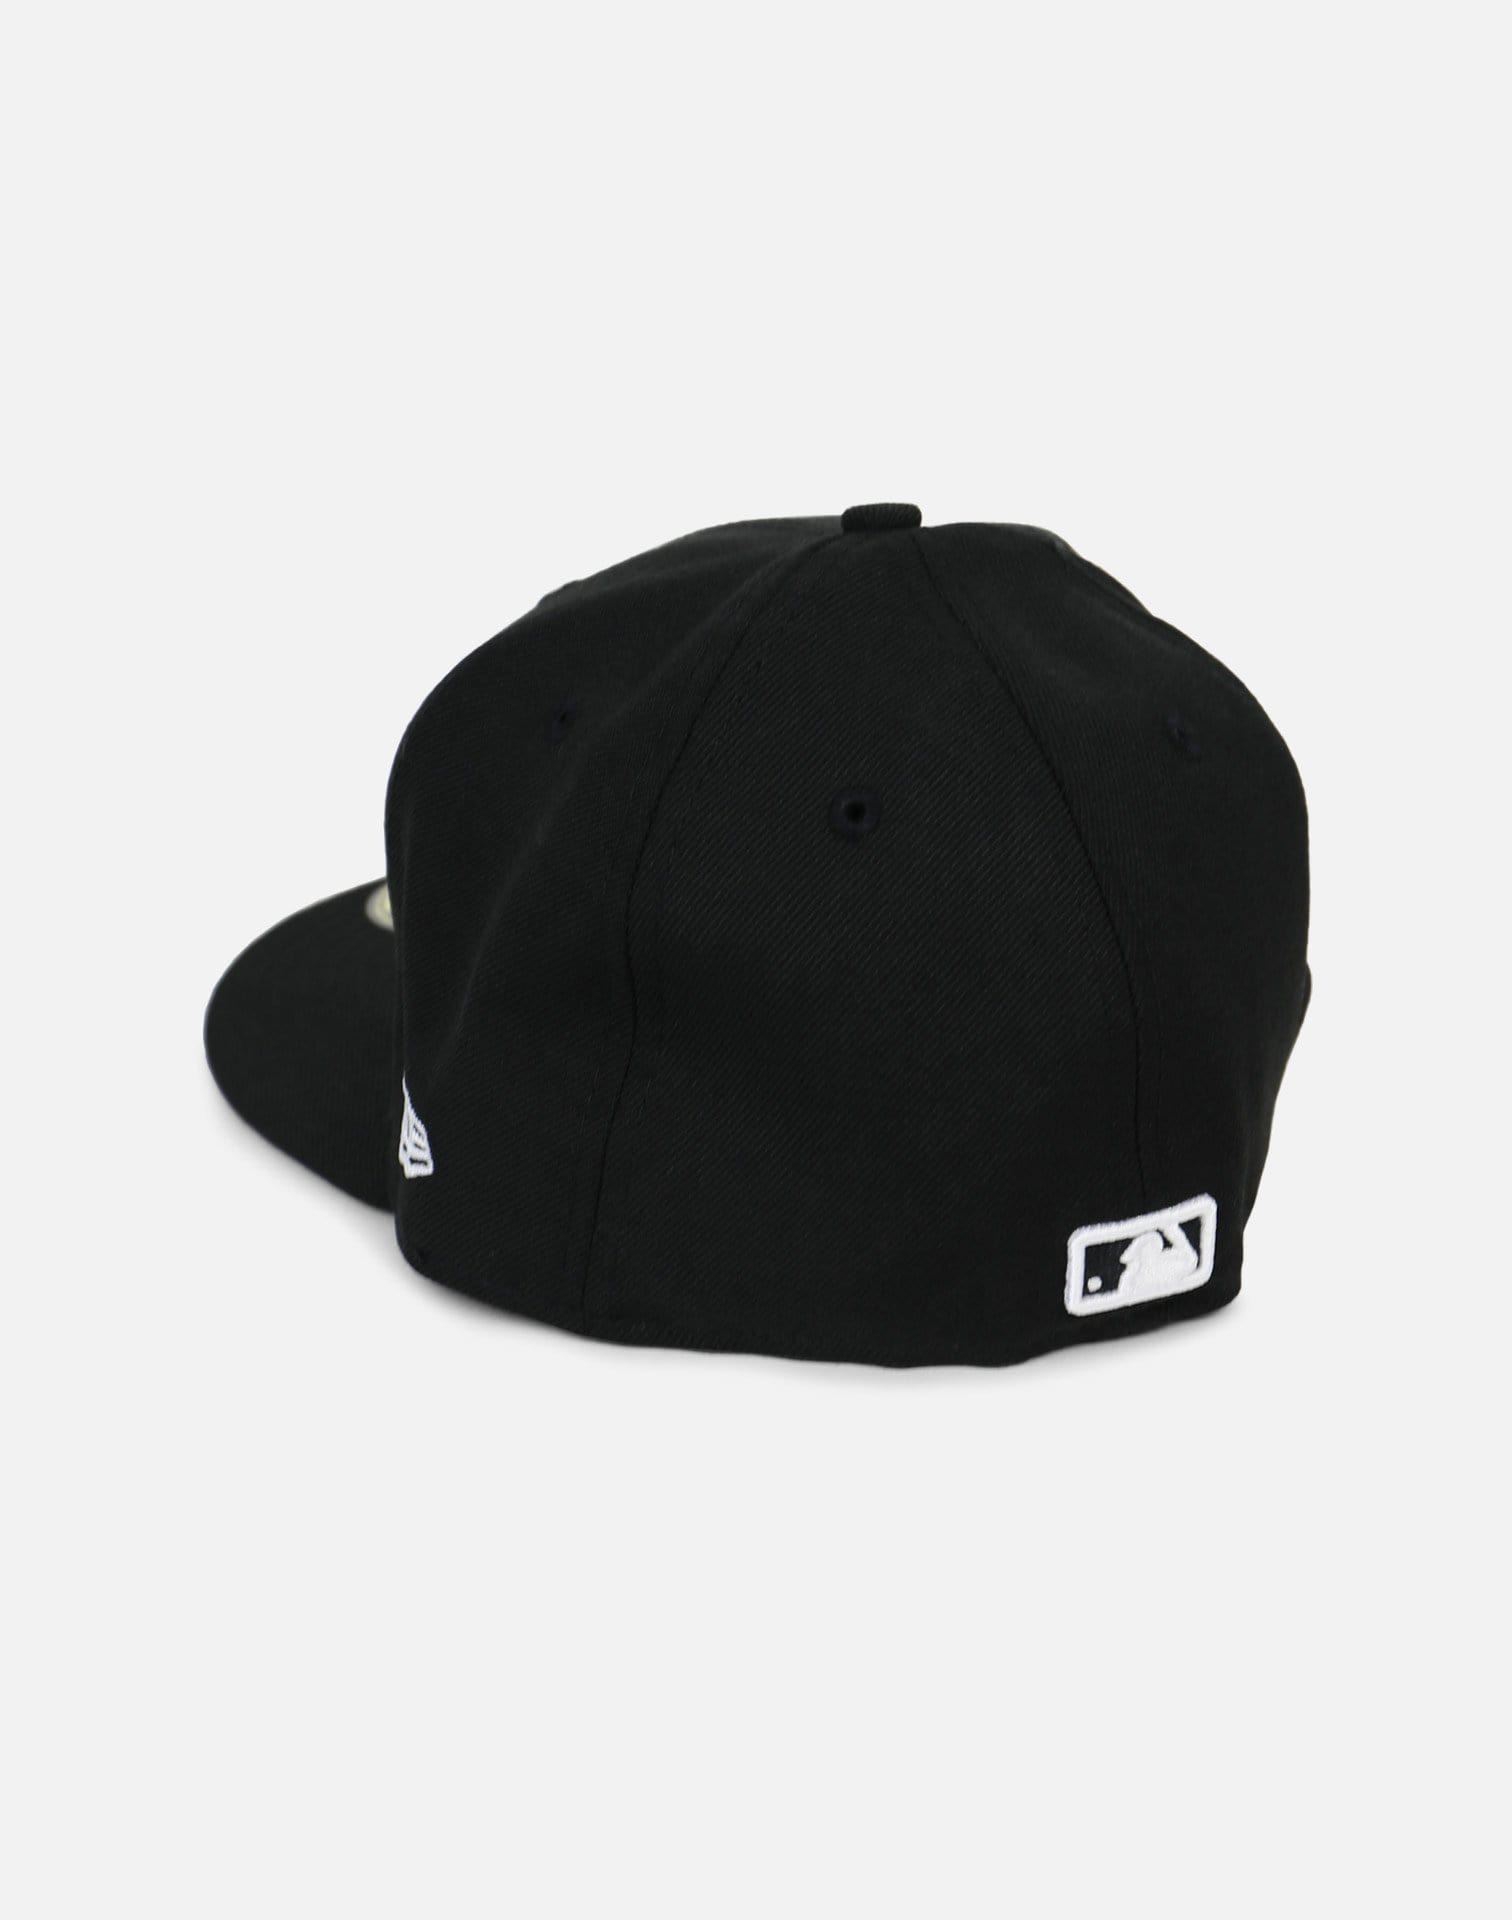 New Era Philadelphia Phillies Black Fitted Hat (Black)